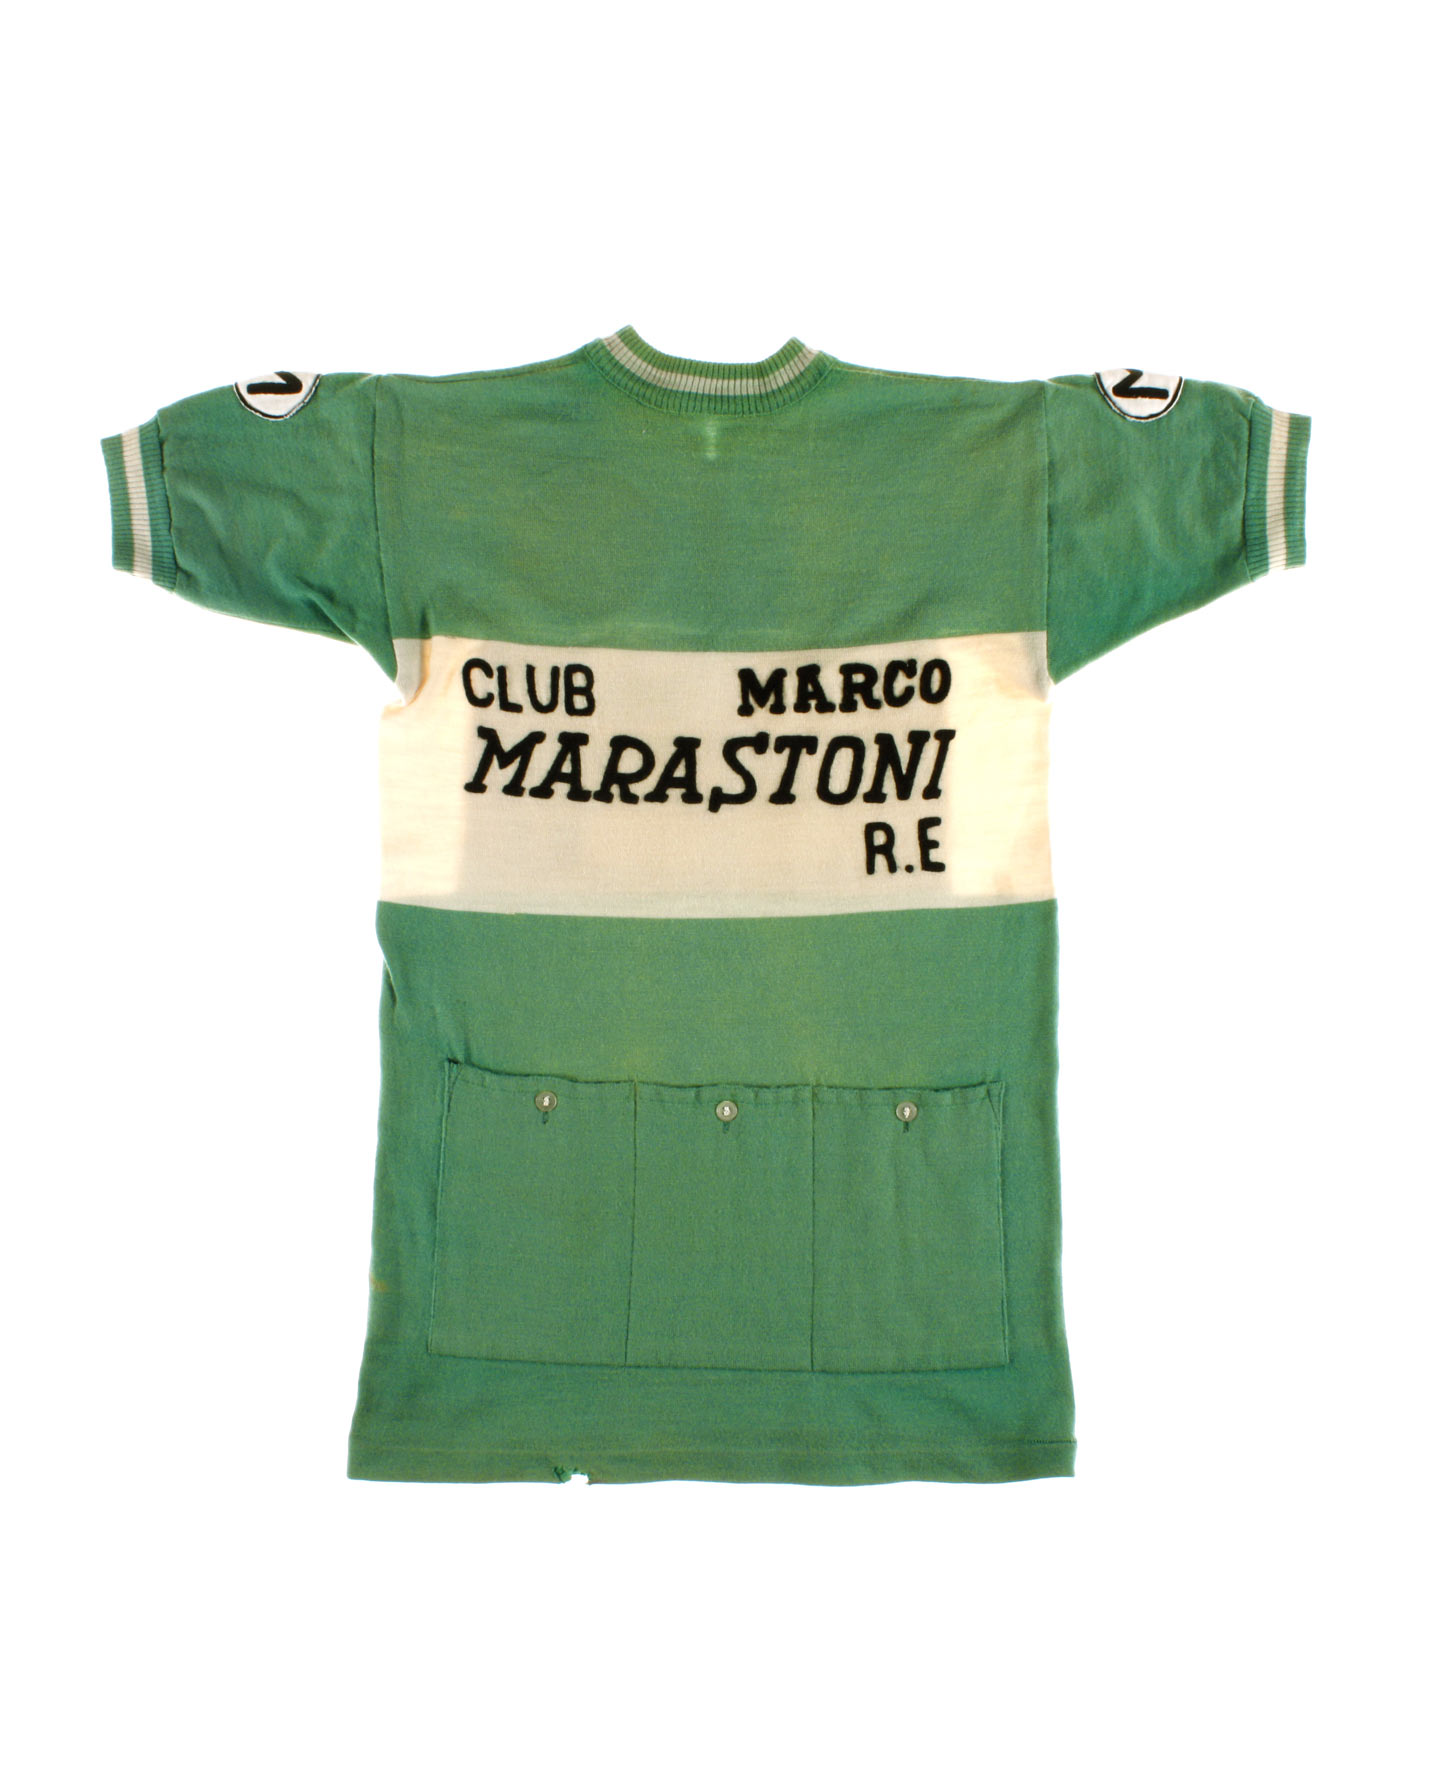 Club Marastoni Cycling wool Rare t-shirt 50s